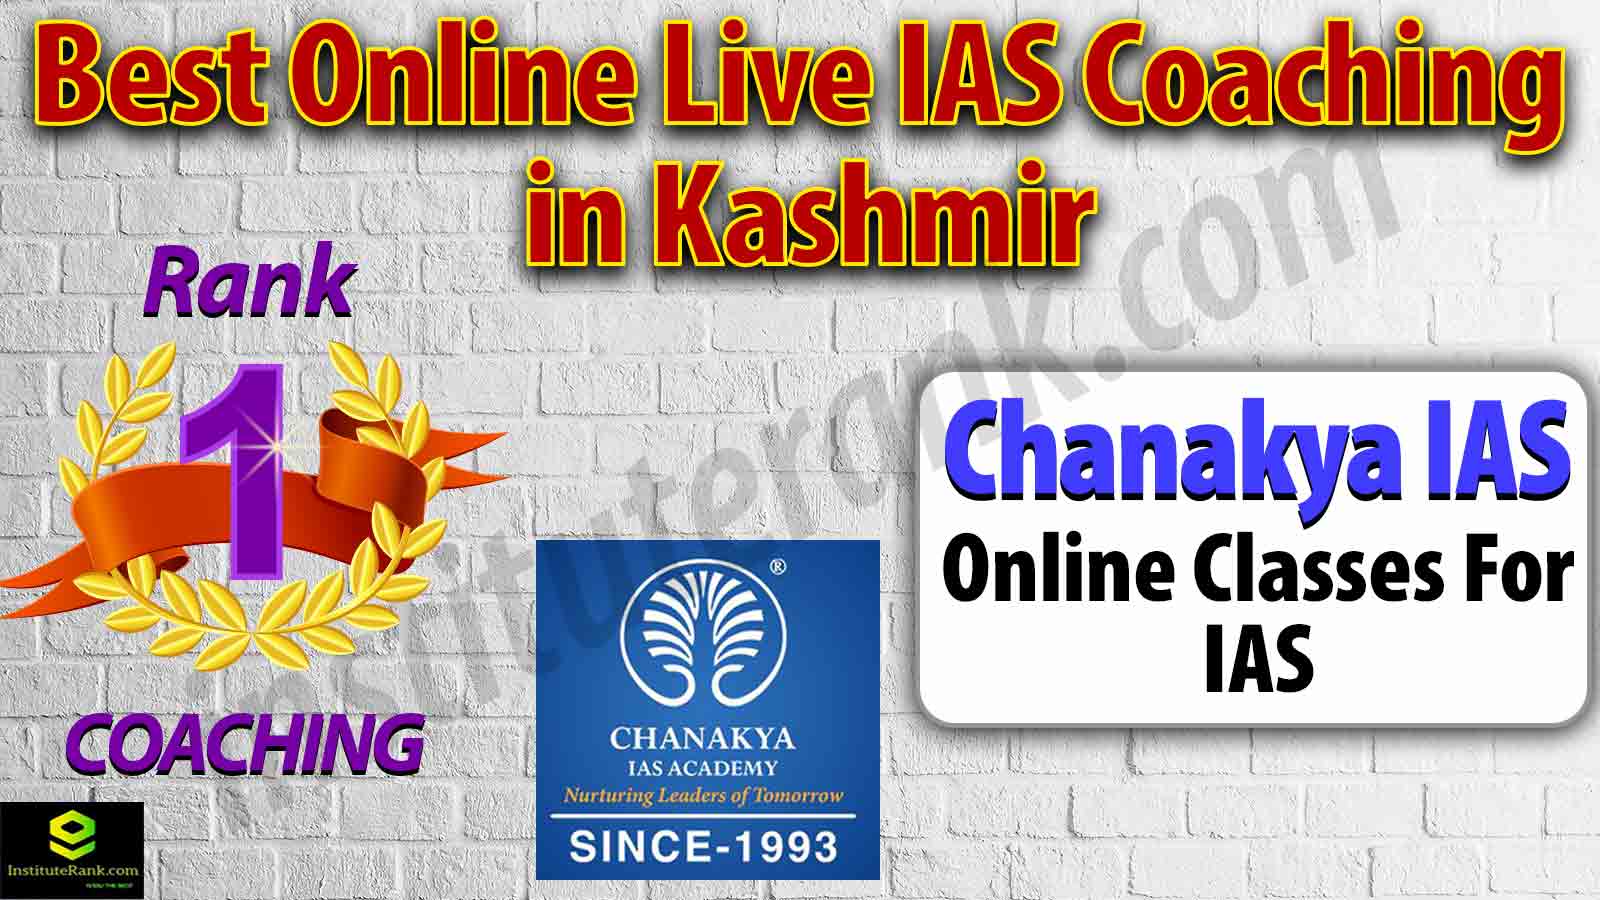 Top Online live IAS Coaching in Kashmir